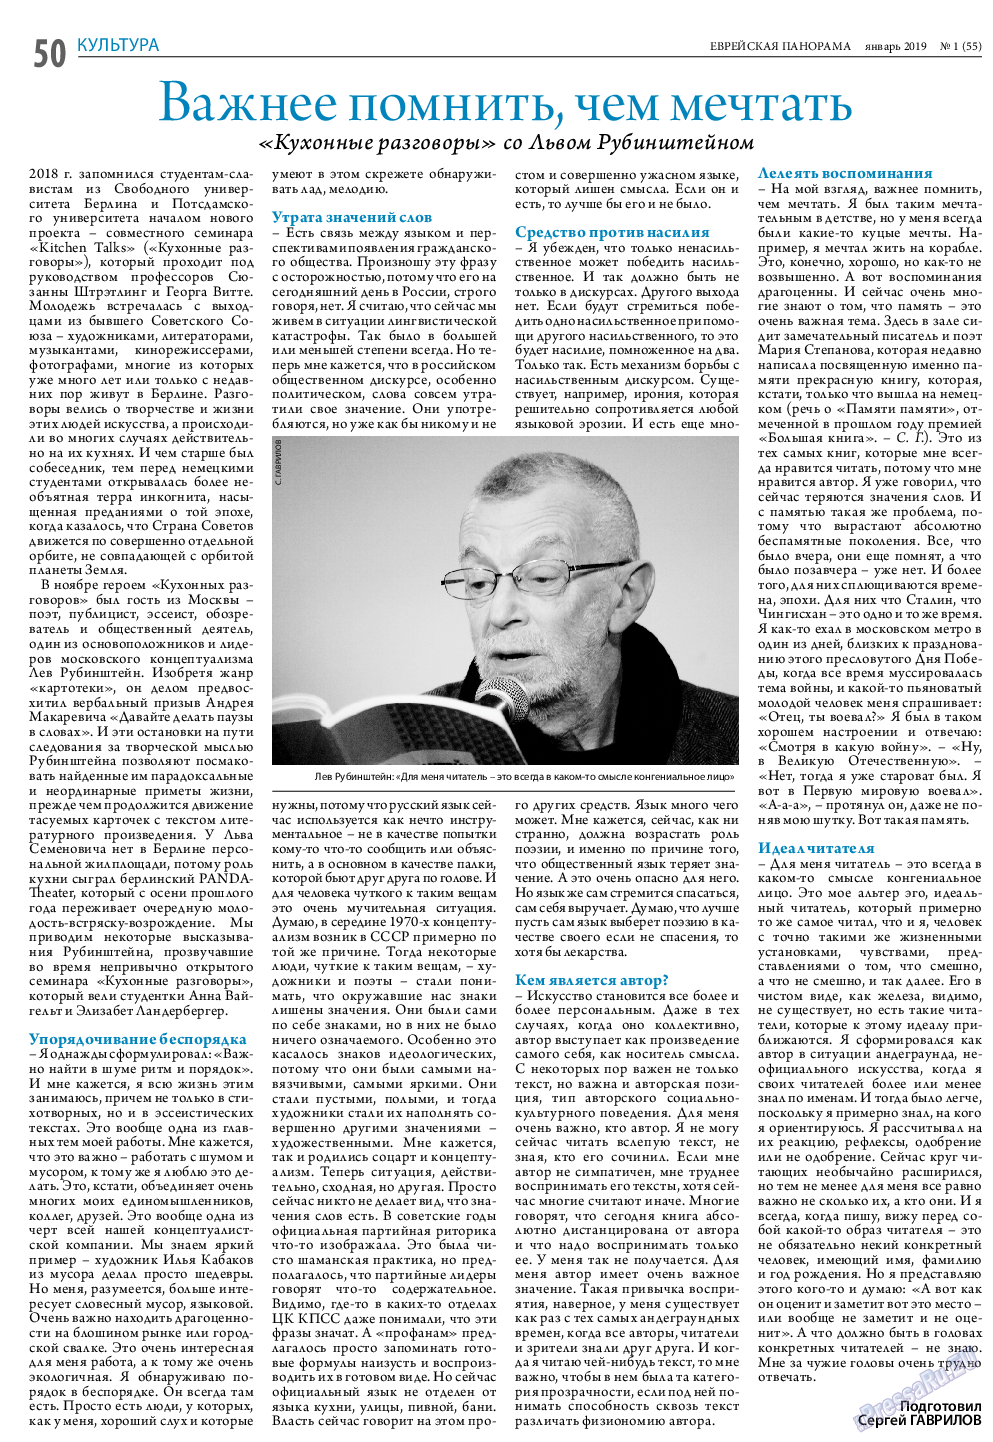 Еврейская панорама, газета. 2019 №1 стр.50